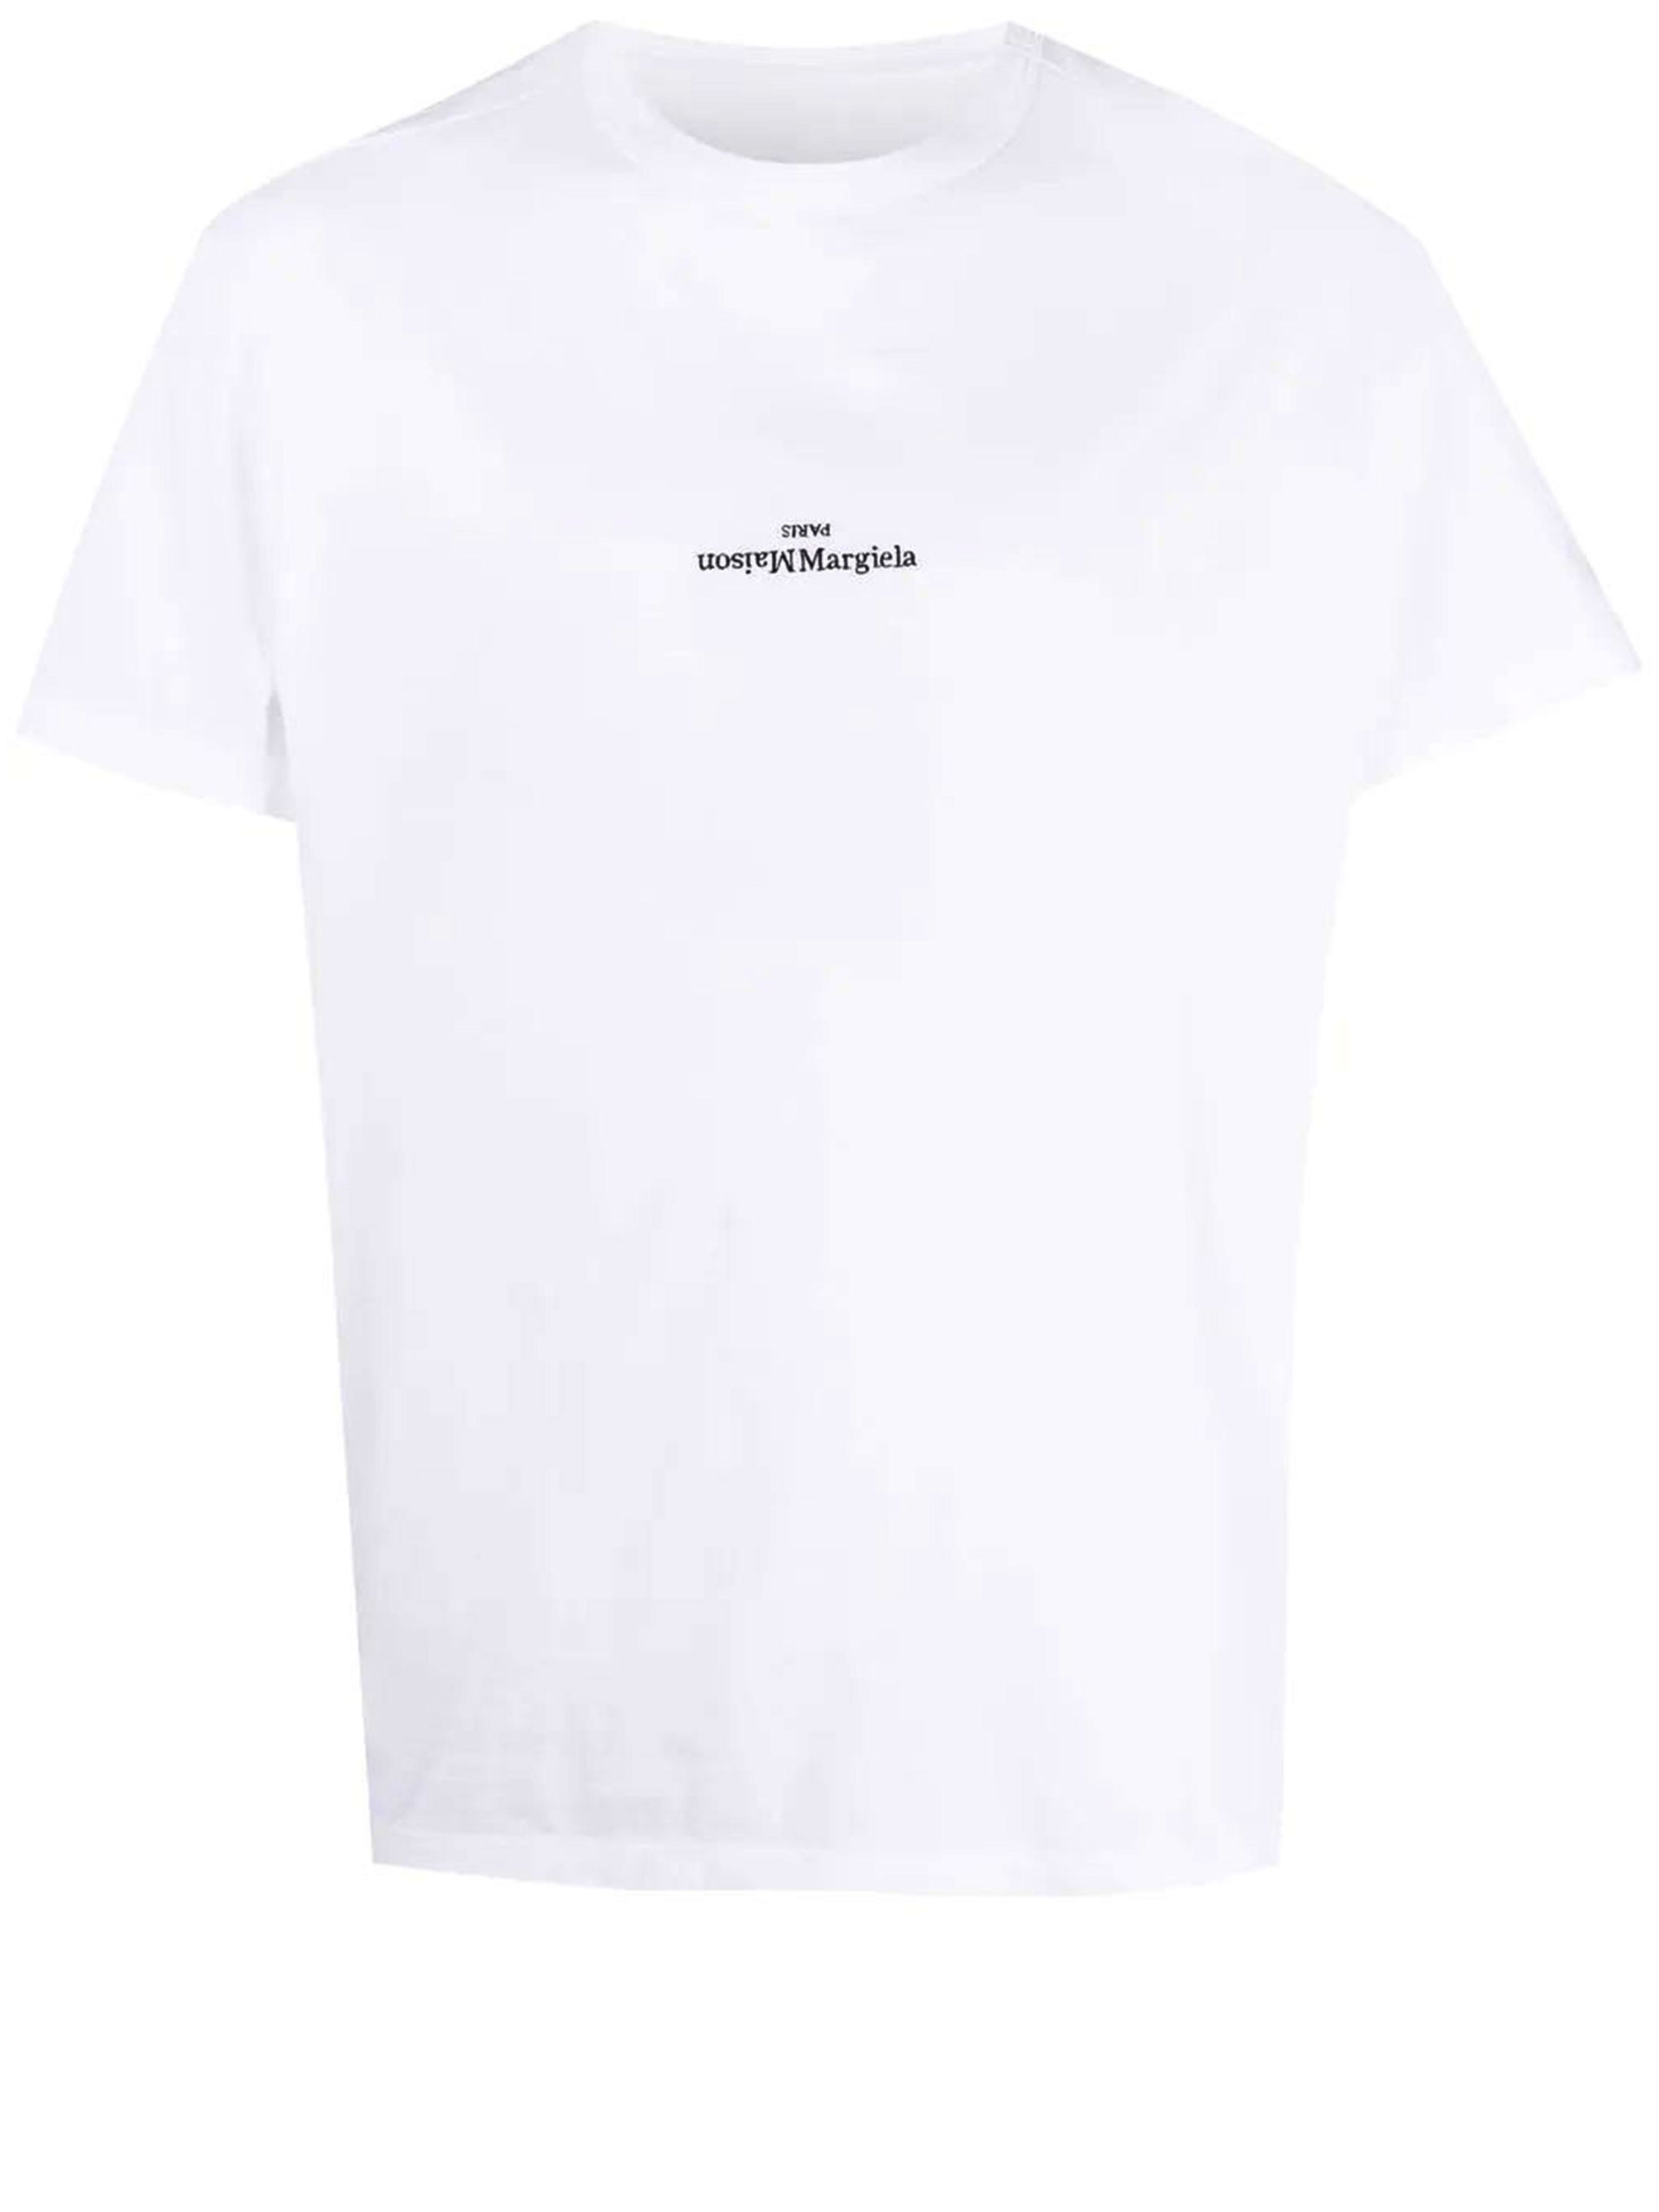 MAISON MARGIELA - White cotton t-shirt | Leam Roma - Luxury 